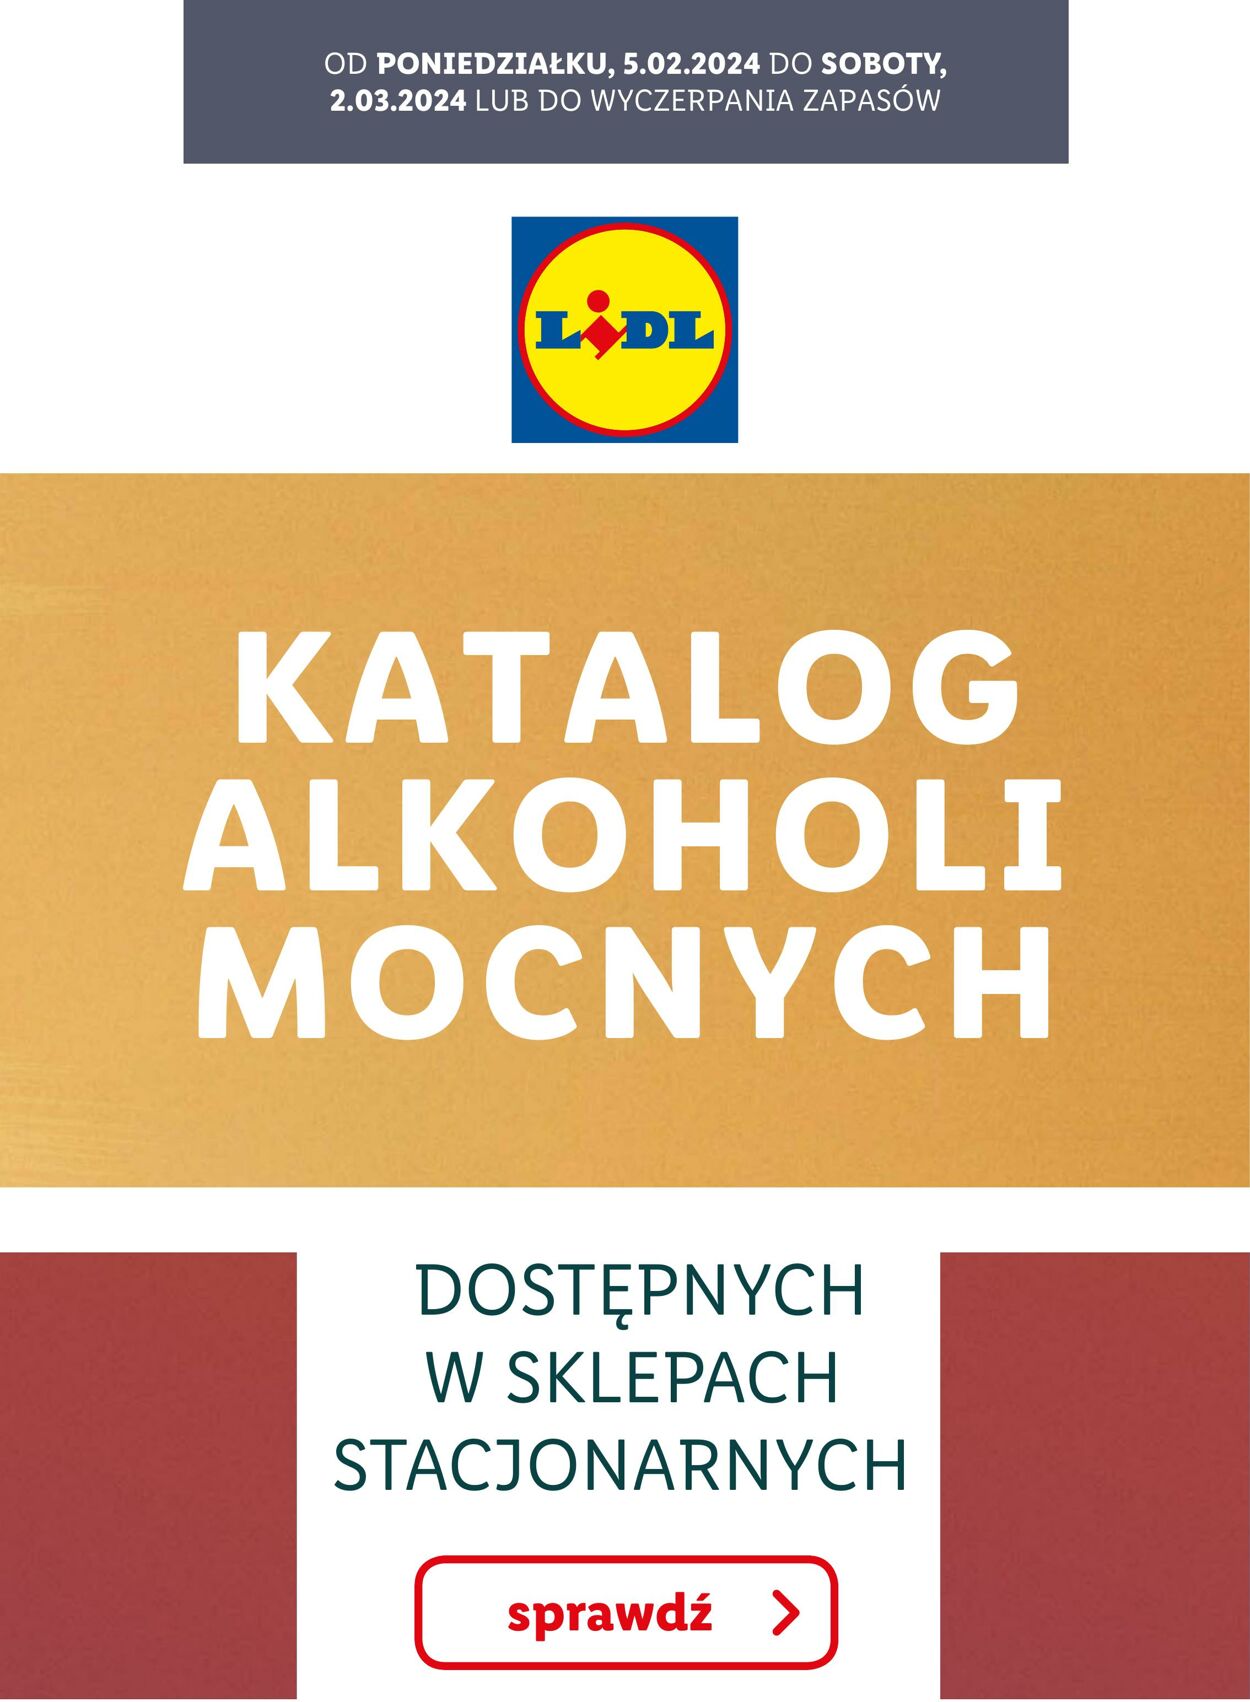 Gazetka Lidl - KATALOG ALKOHOLI MOCNYCH 5 lut, 2024 - 2 mar, 2024